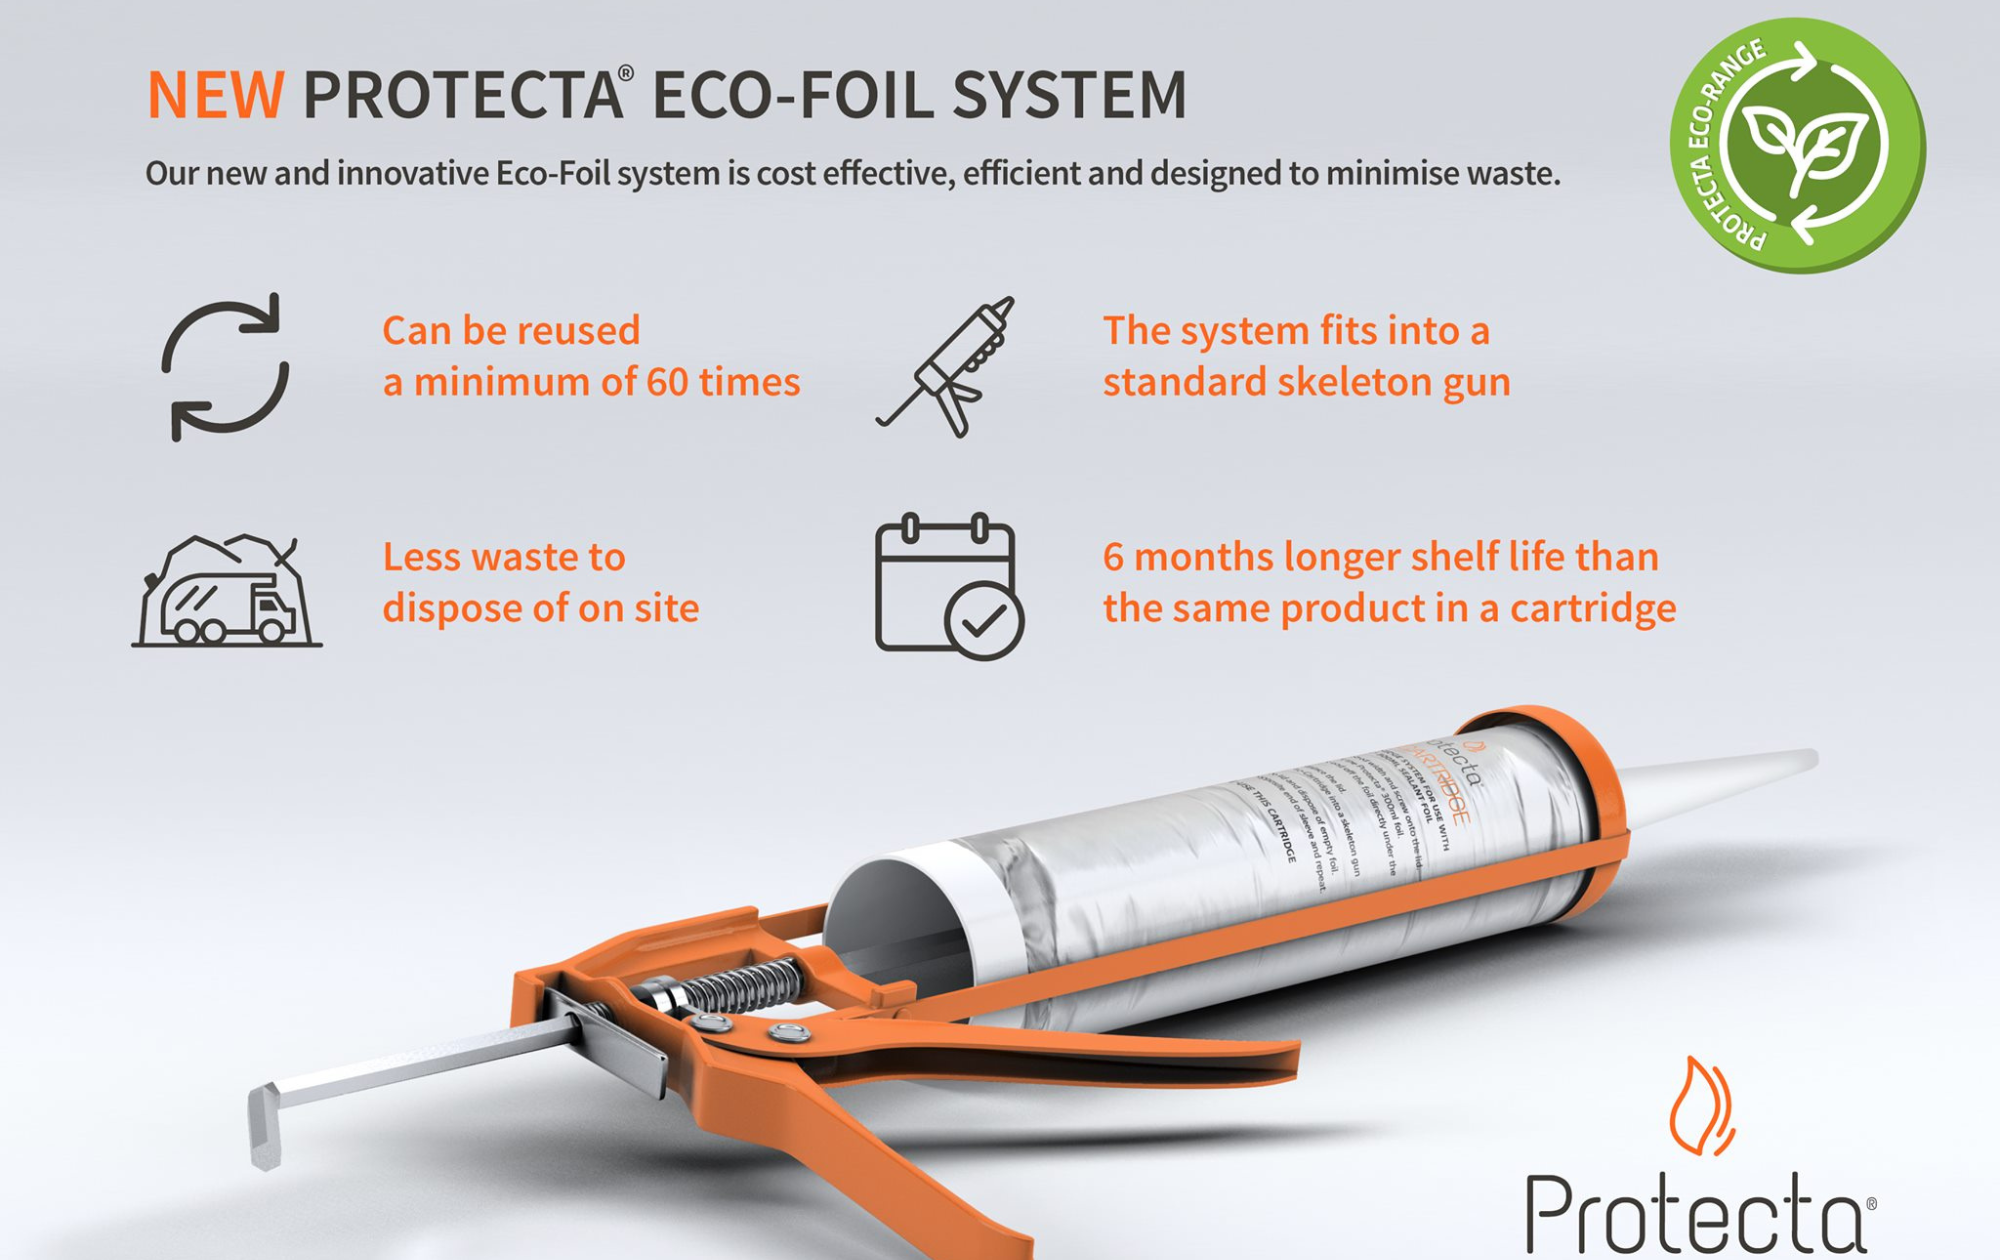 Protecta Eco-Foil Syatem